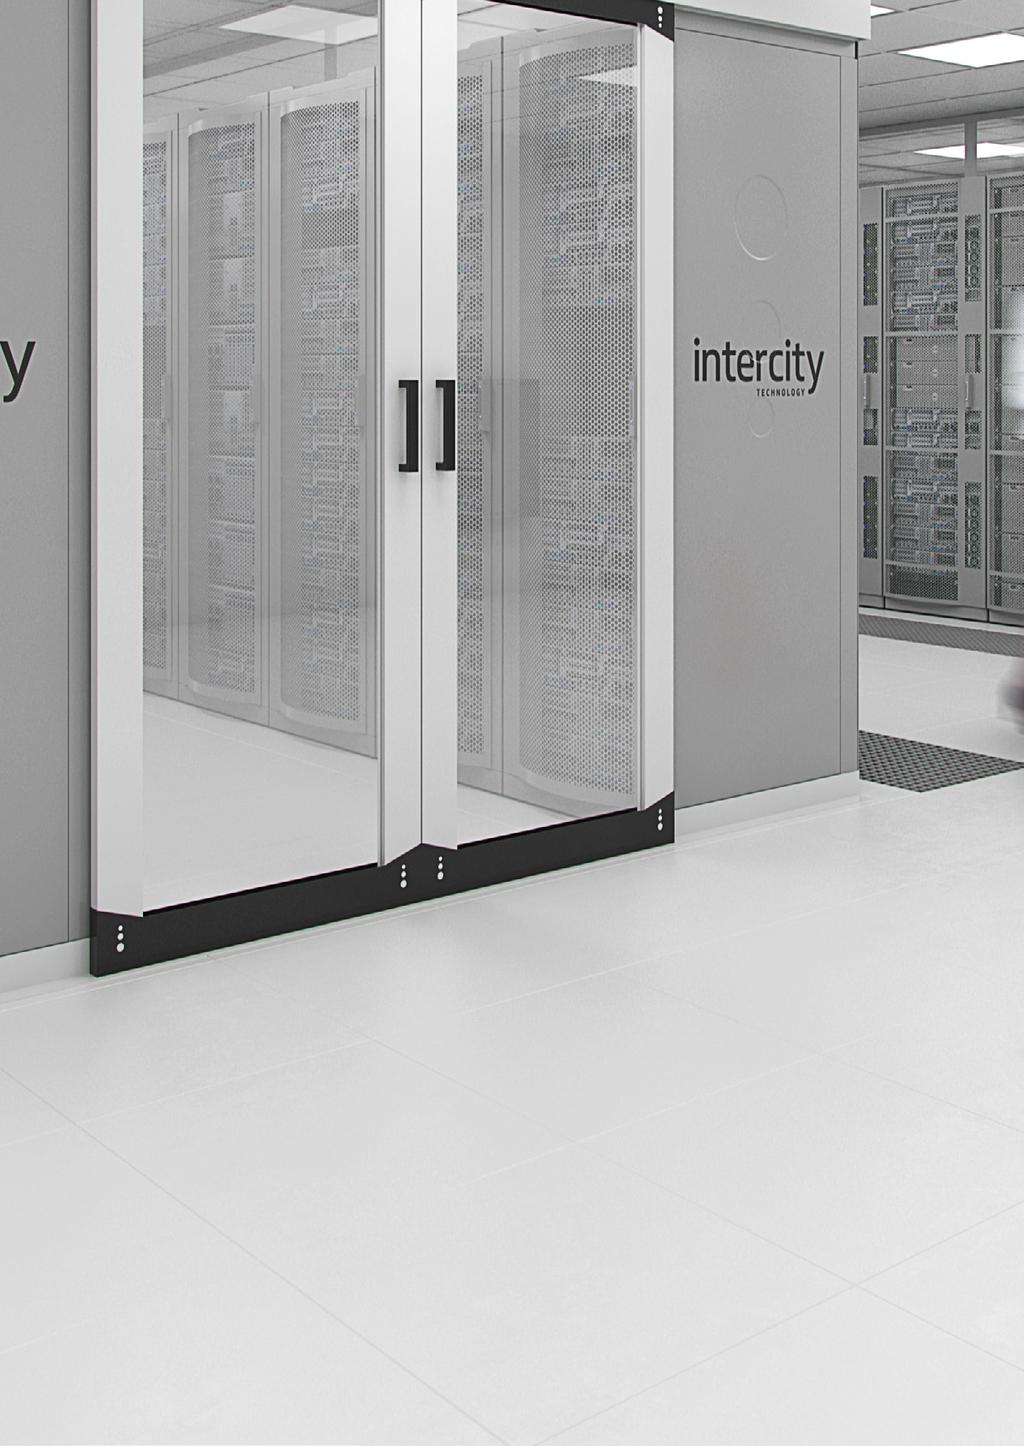 Our advanced data centre infrastructure Maximum flexibility. Enhanced security.